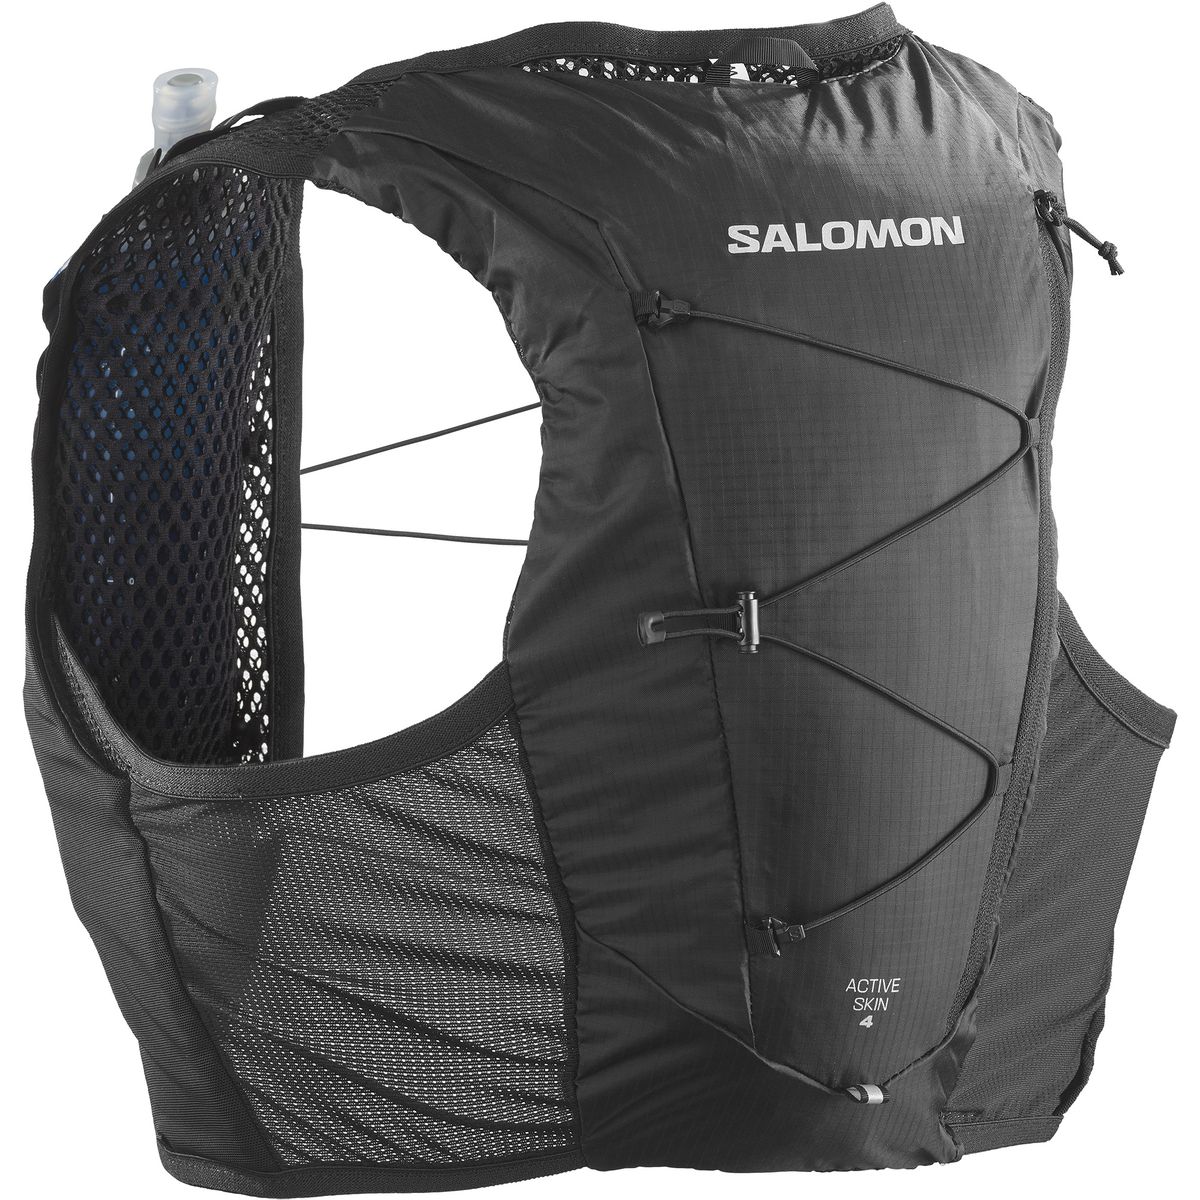 Salomon Active Skin 4 Unisex Runningrucksack